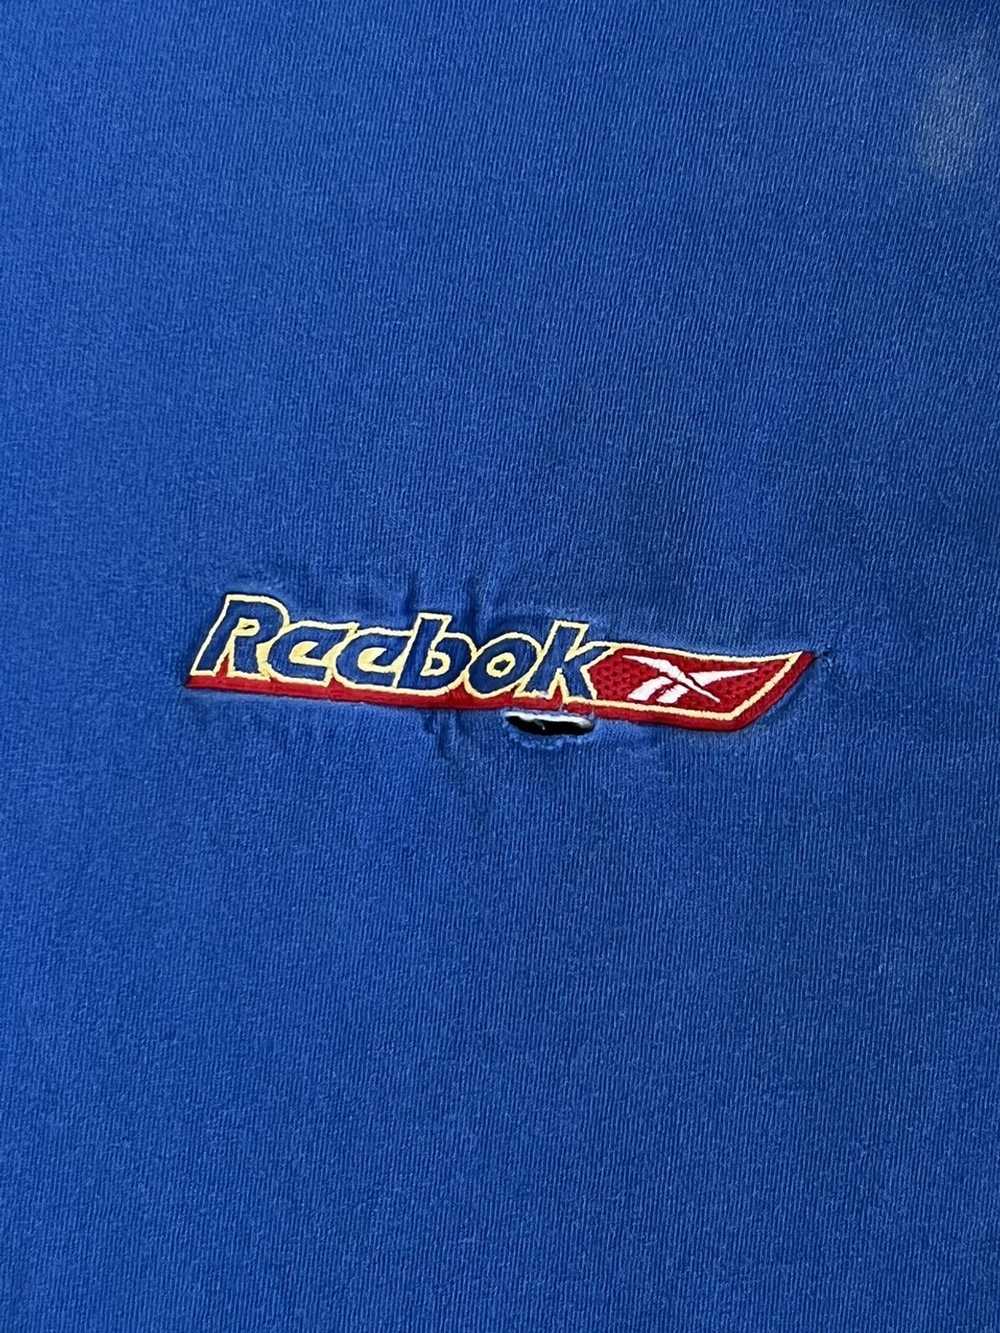 Reebok × Vintage Vintage Reebok T-shirt japan - image 2